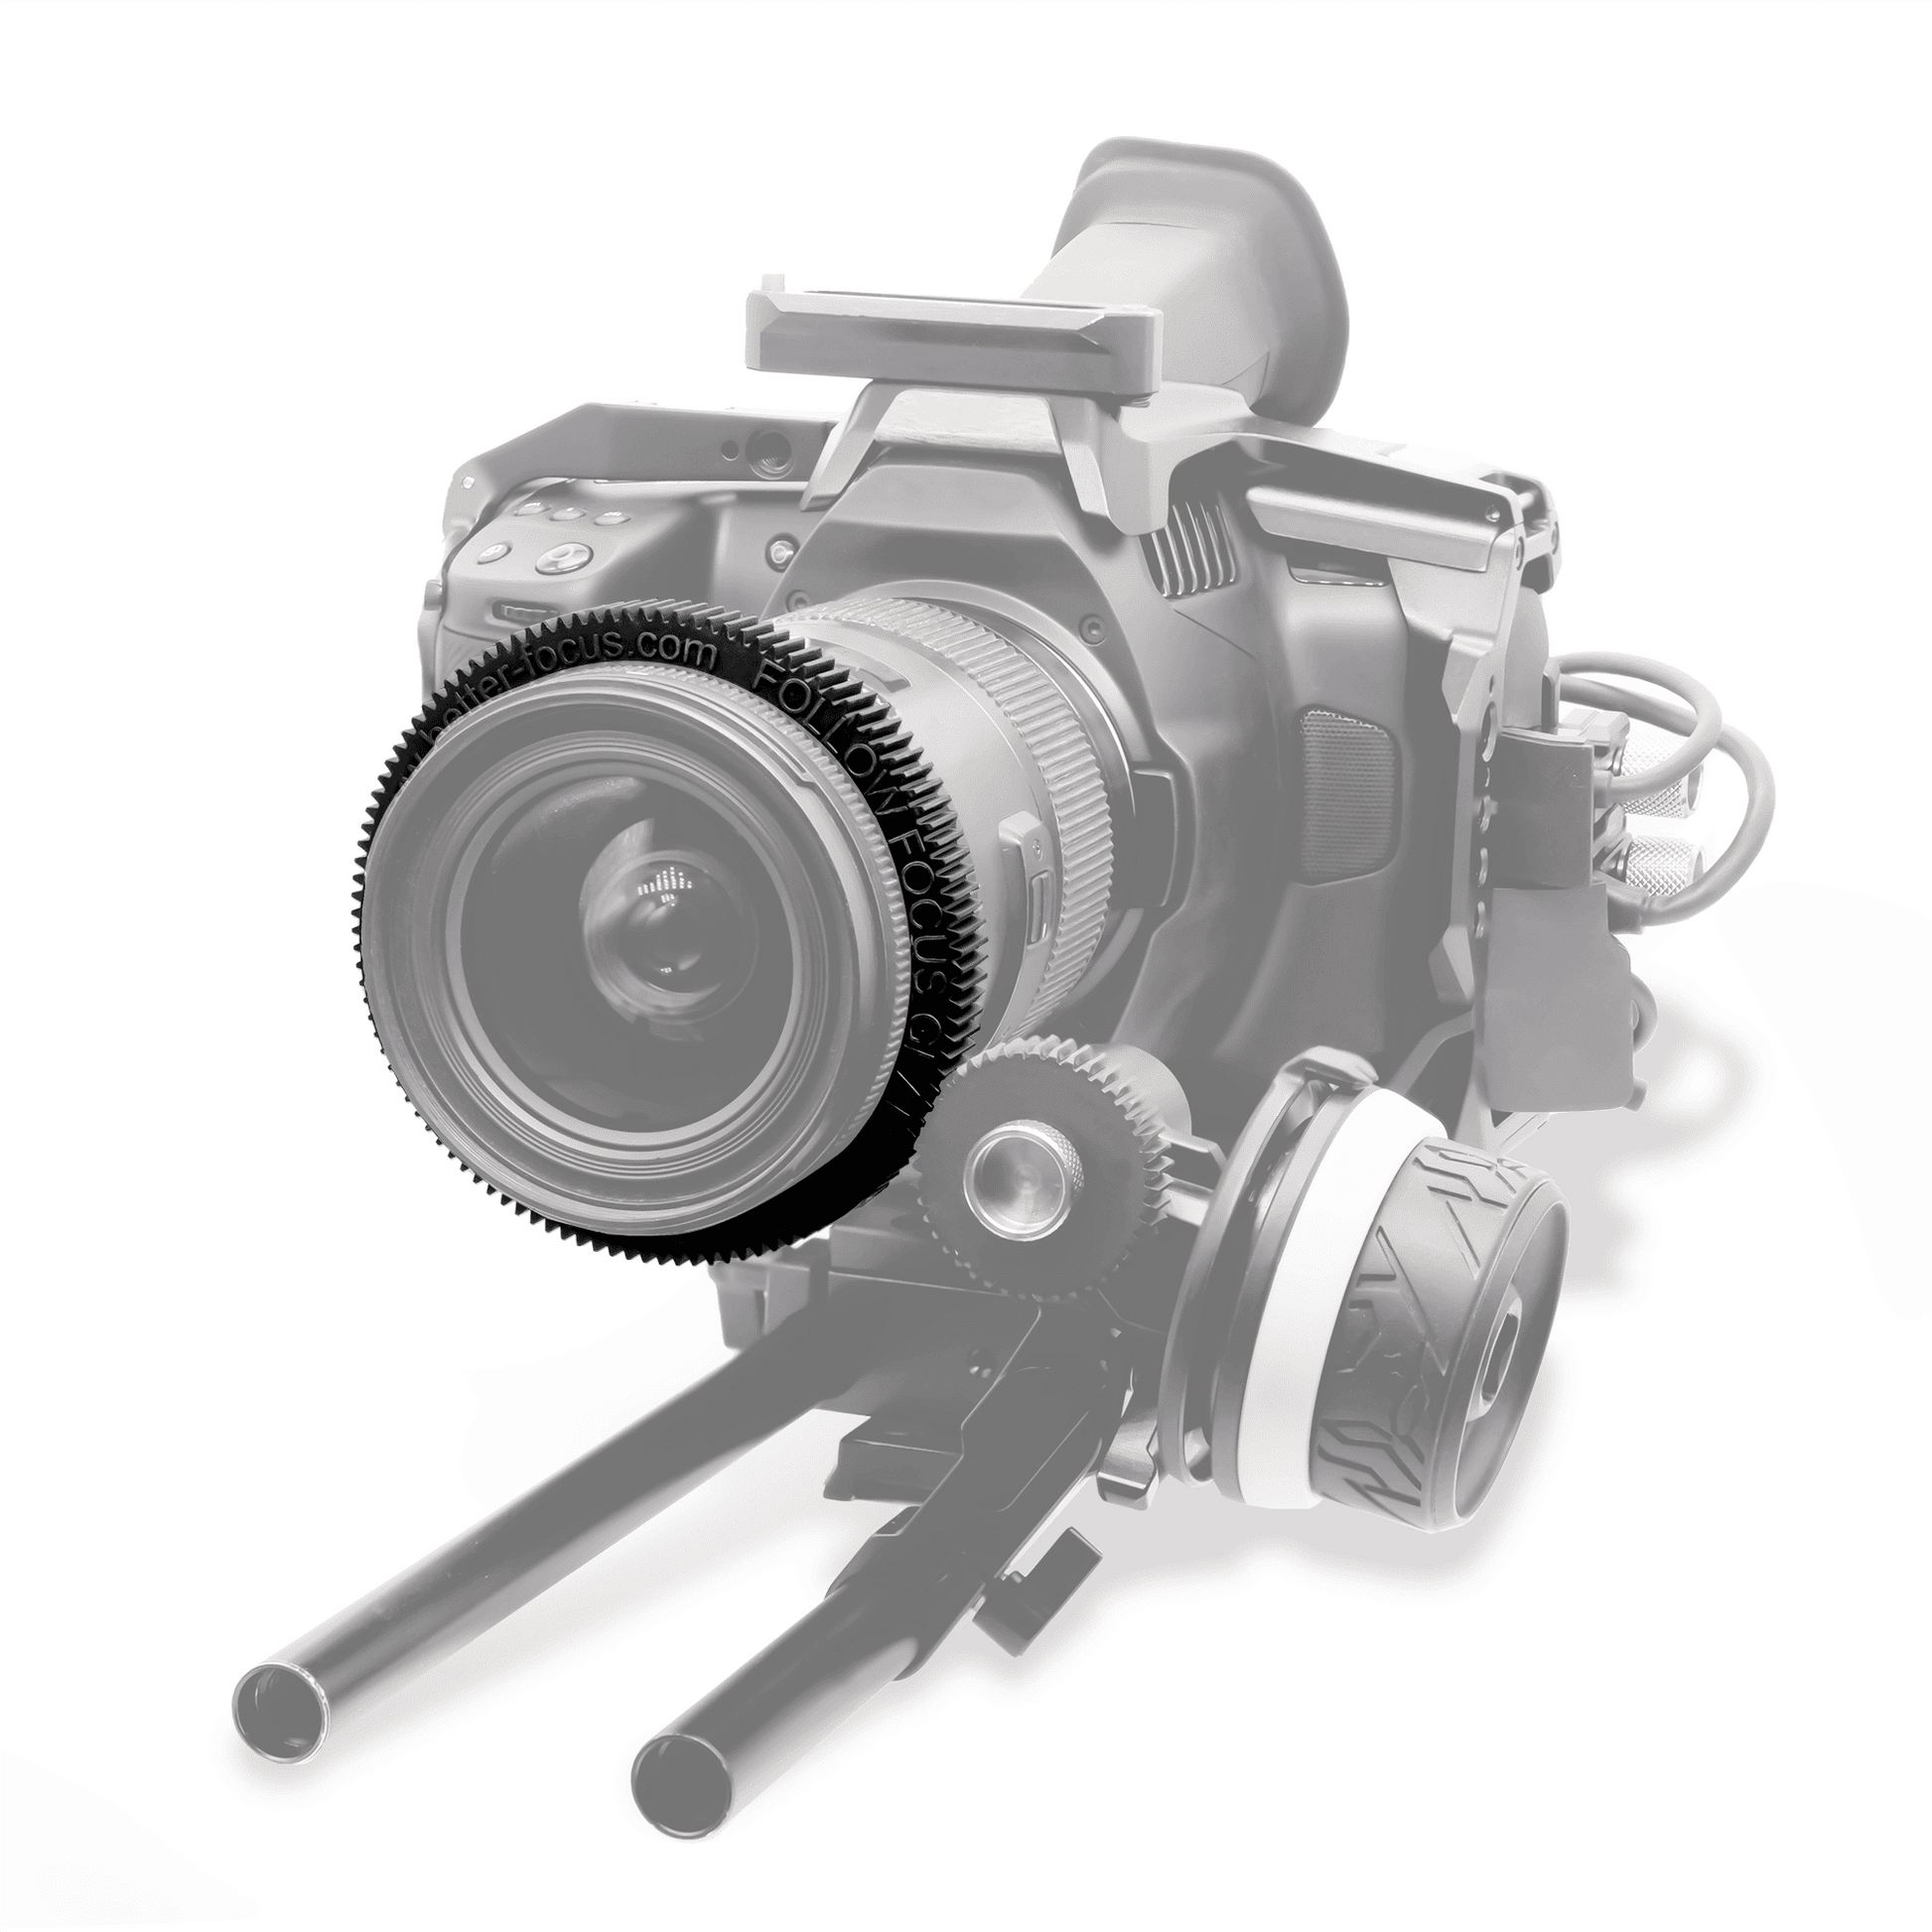 Follow Focus Gear for Nikon NIKKOR Z 180-600mm F/5.6-6.3 VR lens